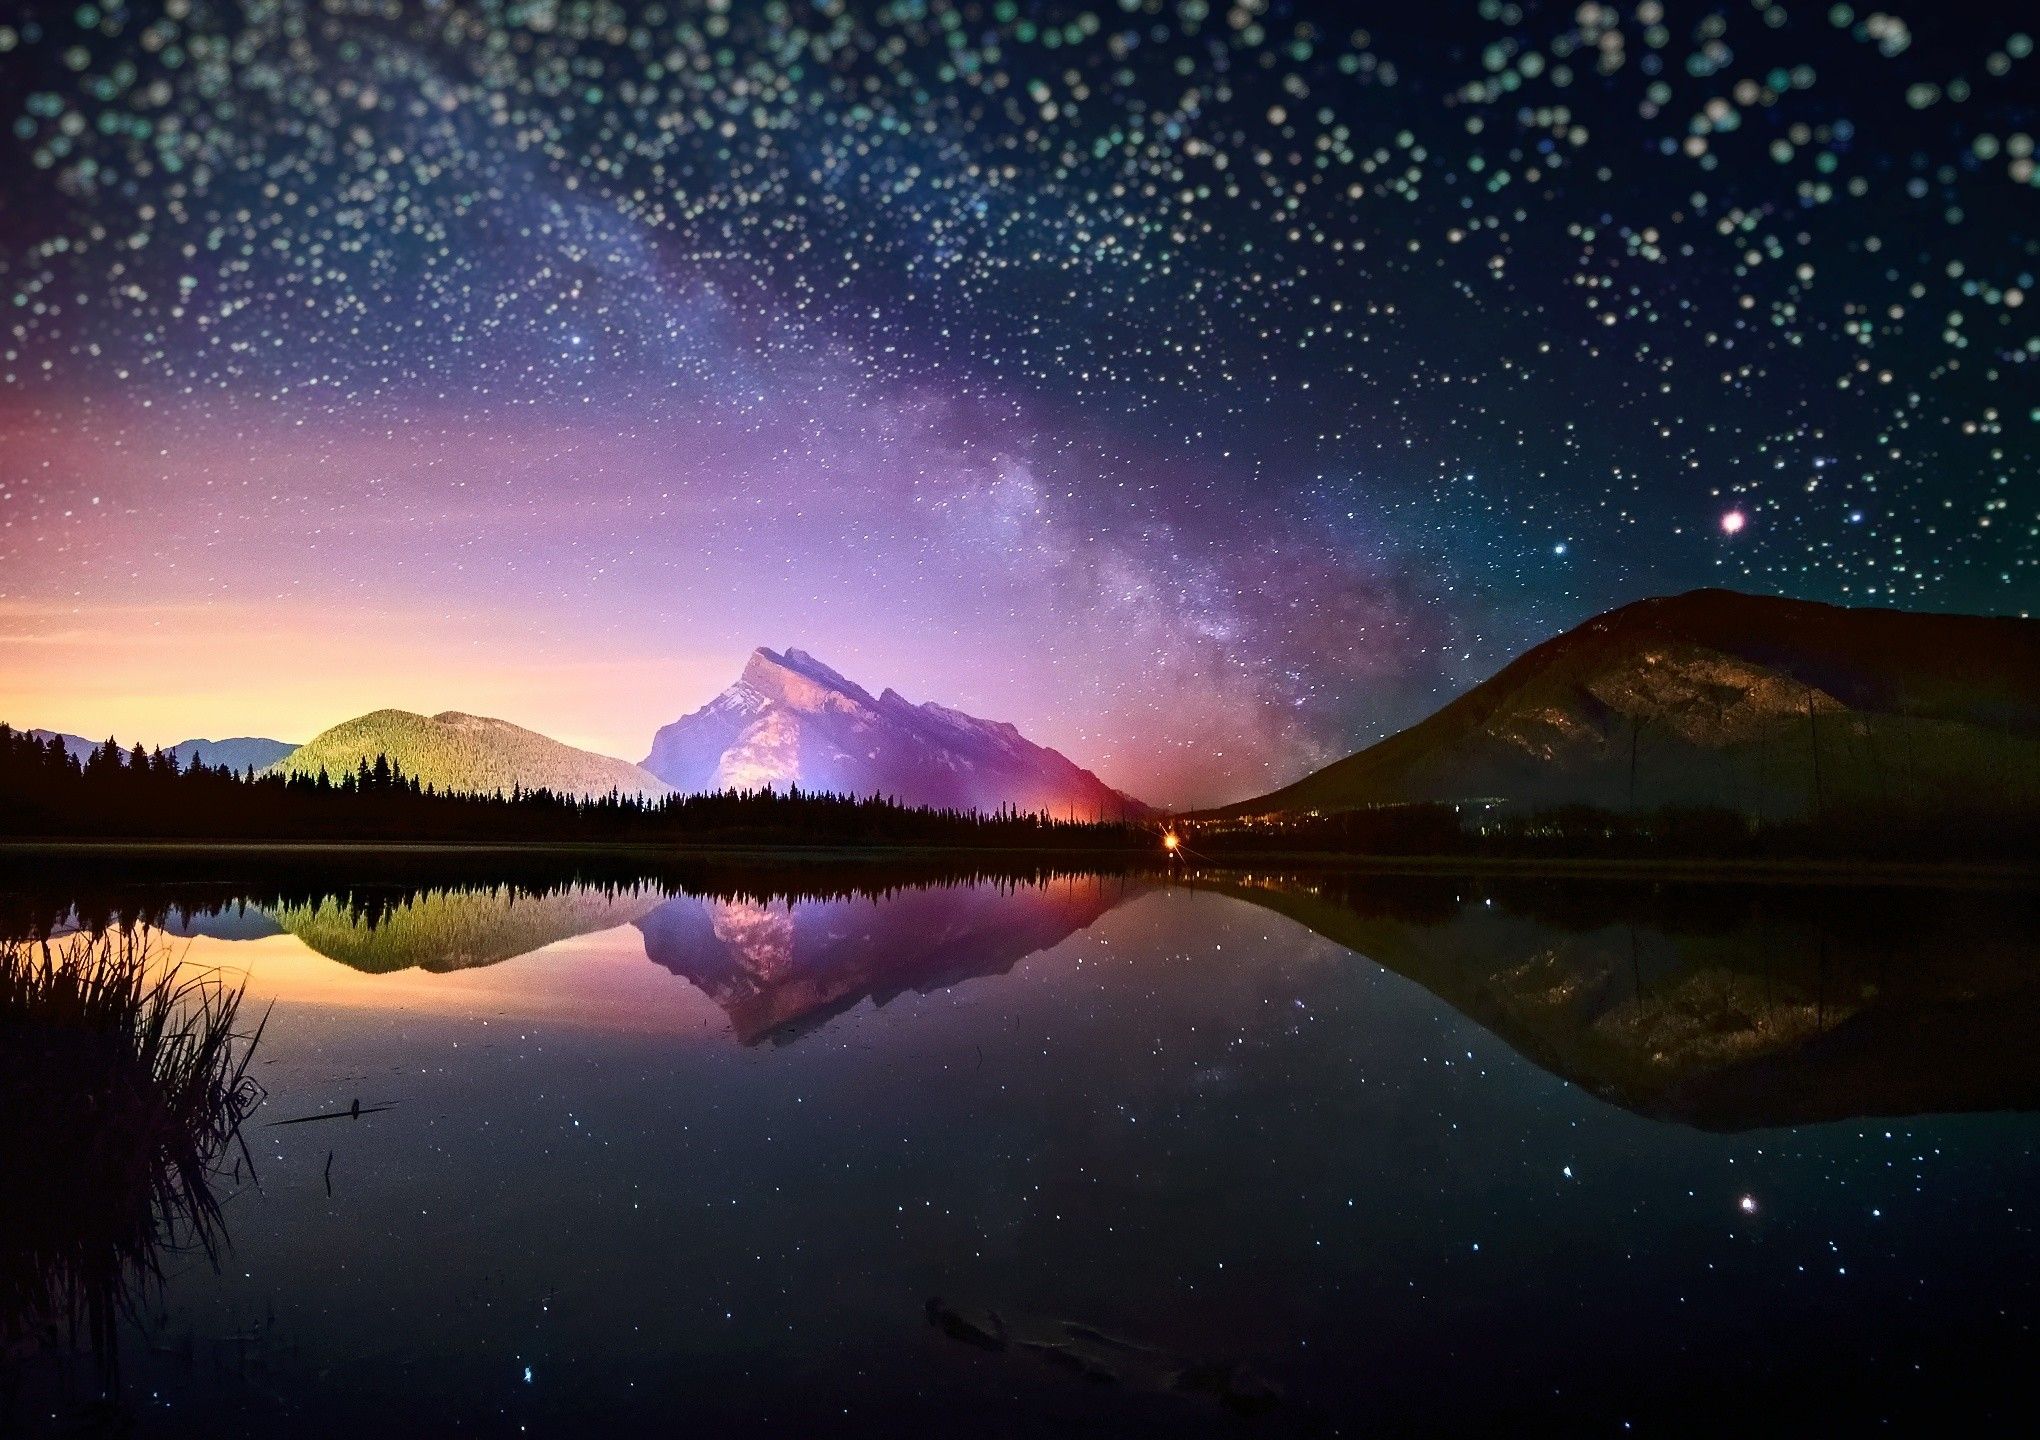 A life's tale. Night sky wallpaper, Starry night sky